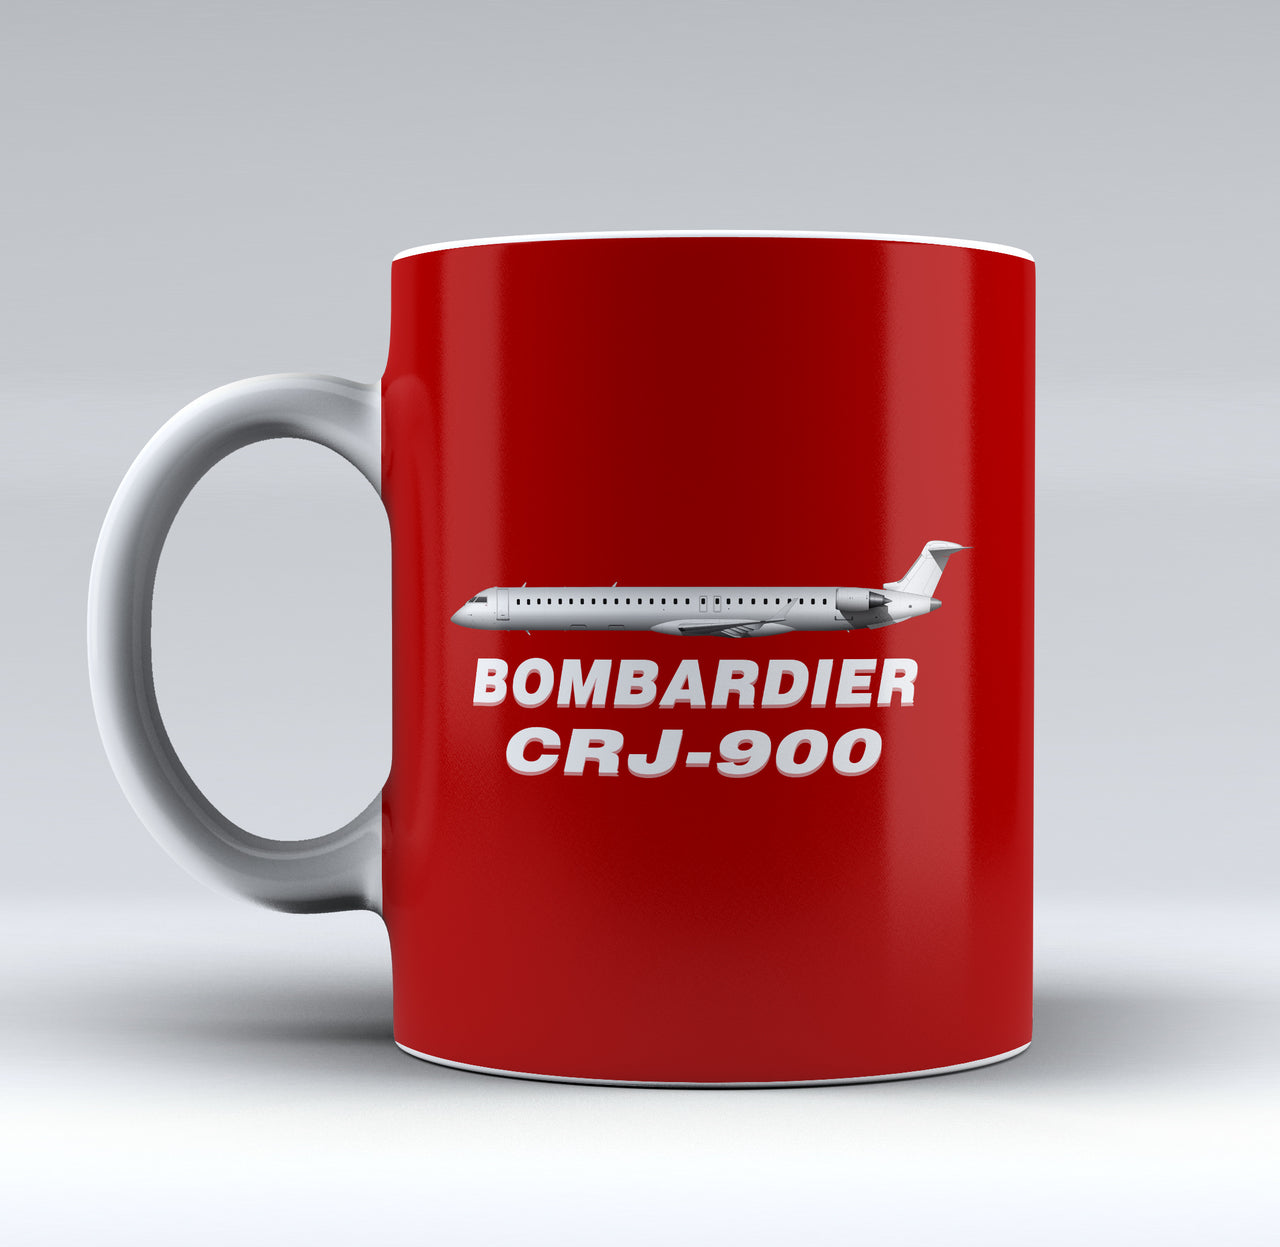 The Bombardier CRJ-900 Designed Mugs